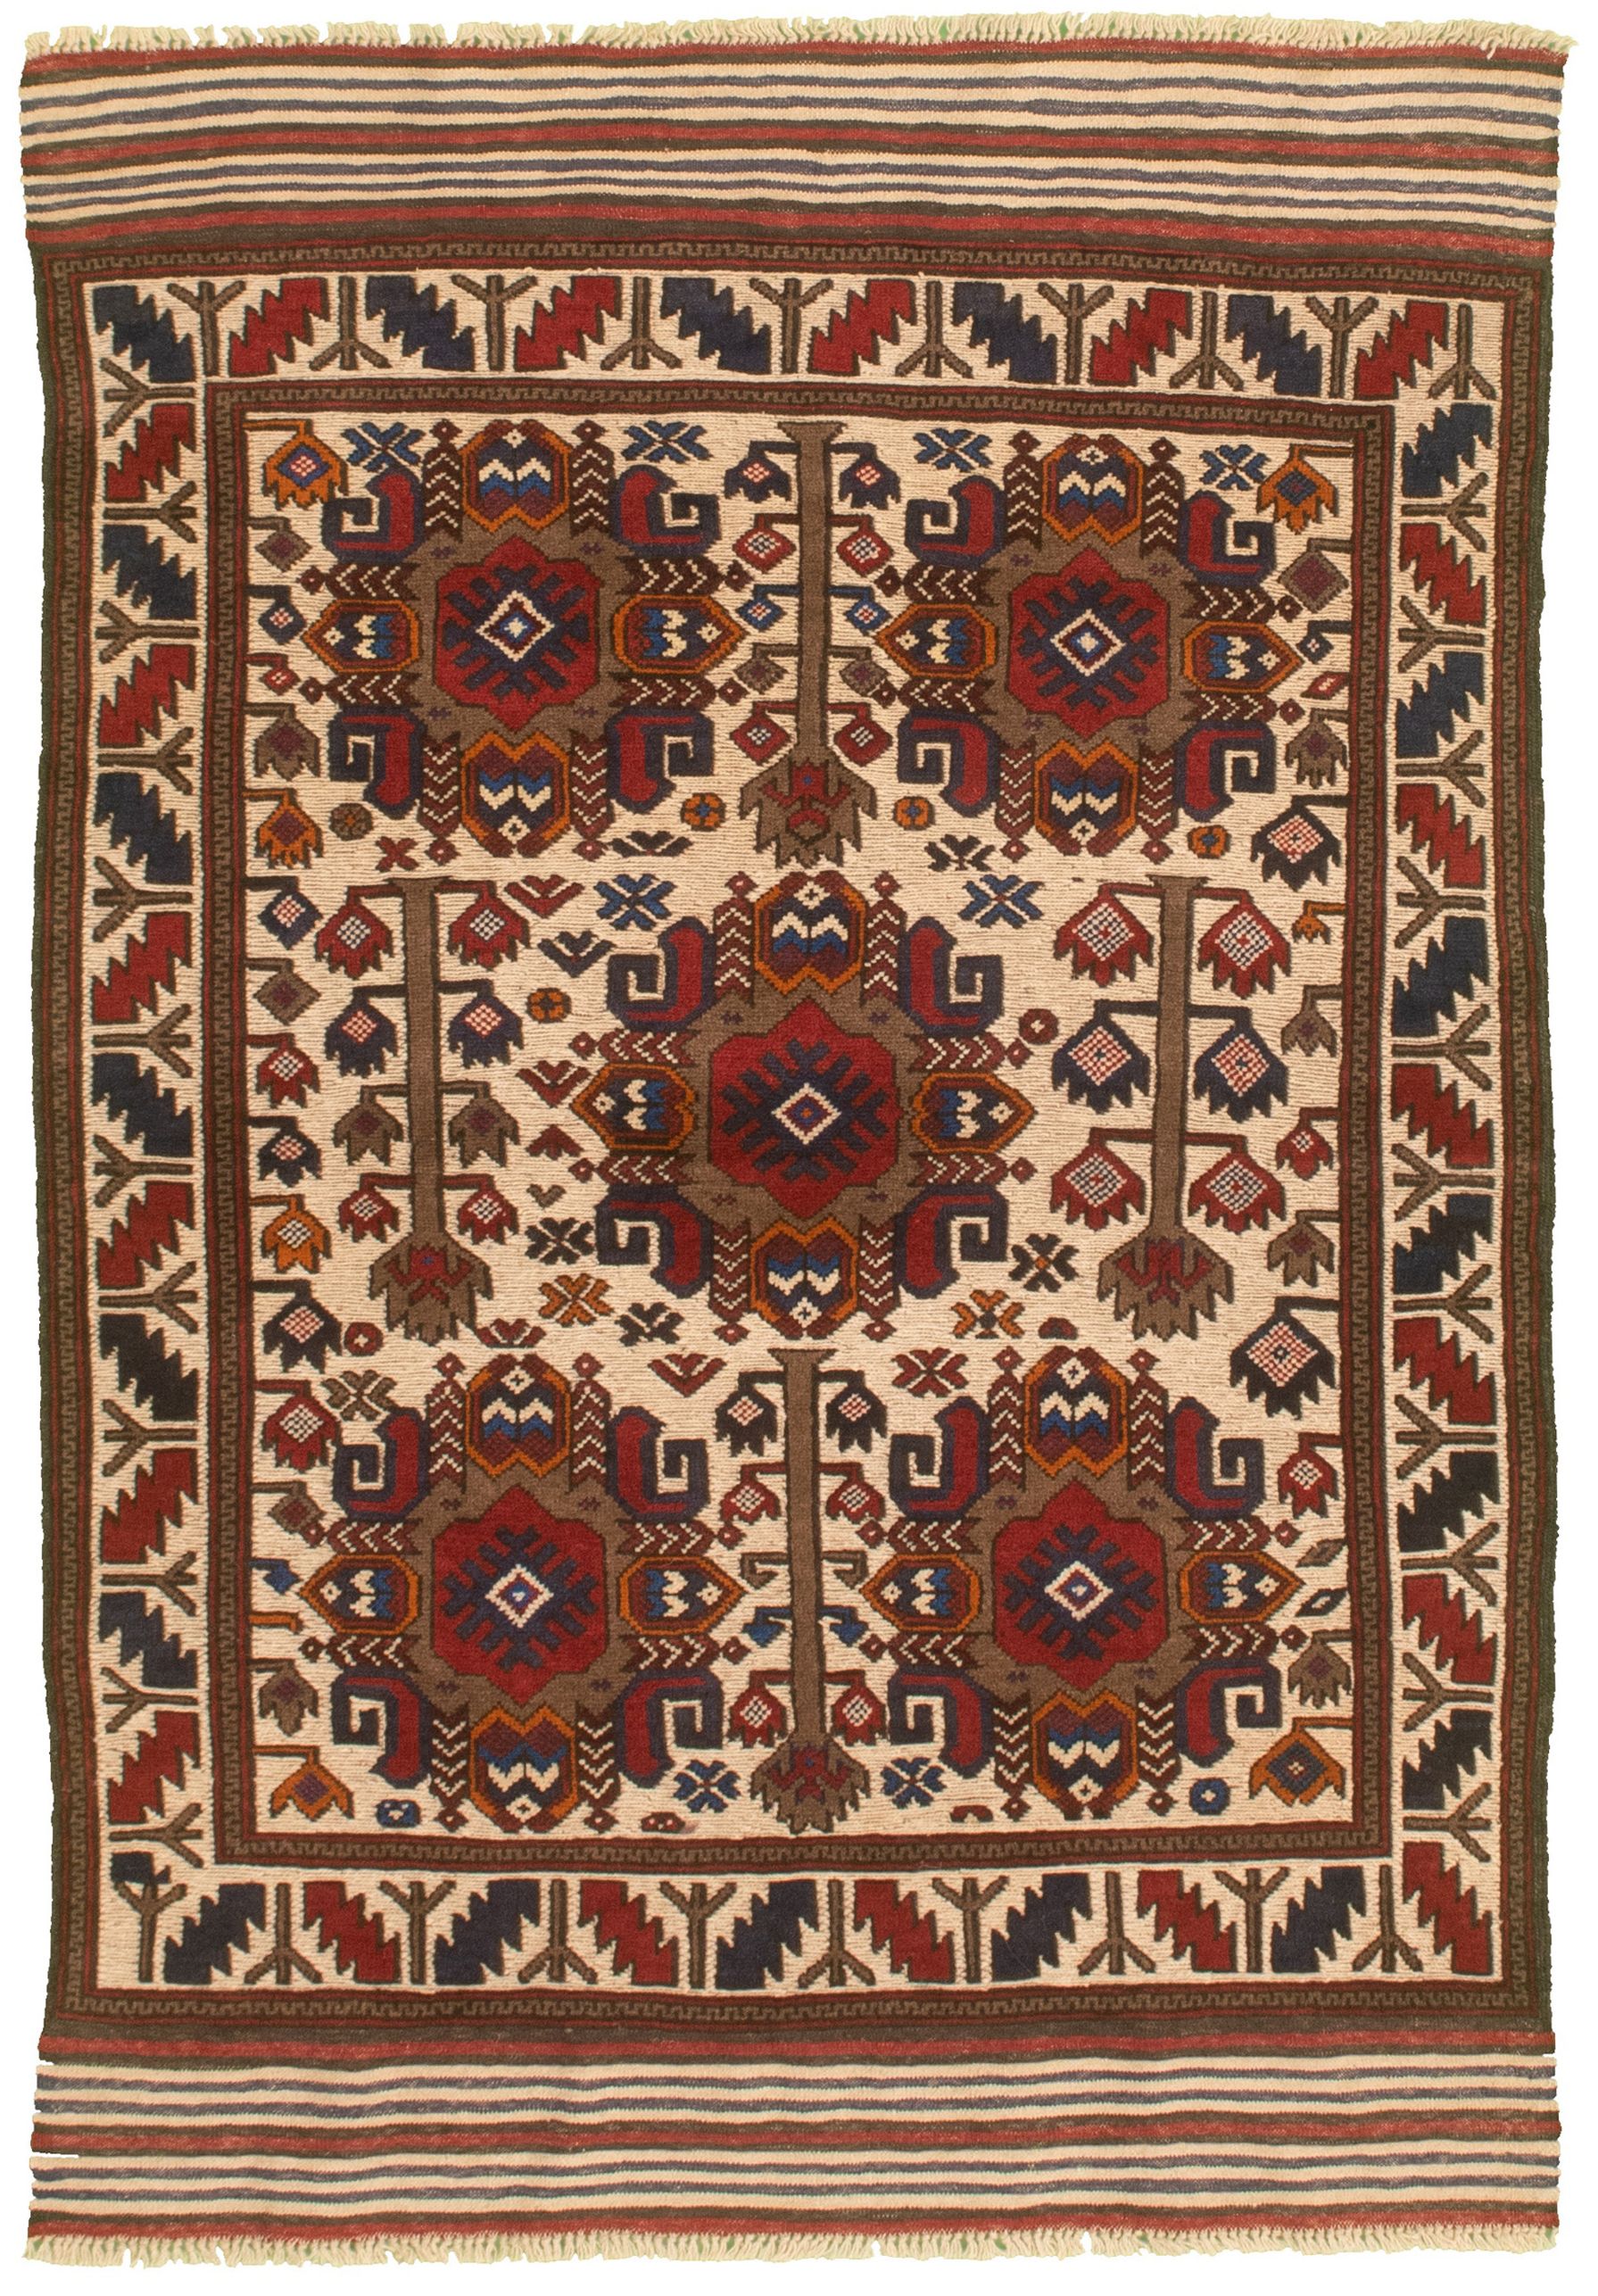 Hand-knotted Tajik Caucasian Red Wool Rug 4'0" x 5'11" Size: 4'0" x 5'11"  